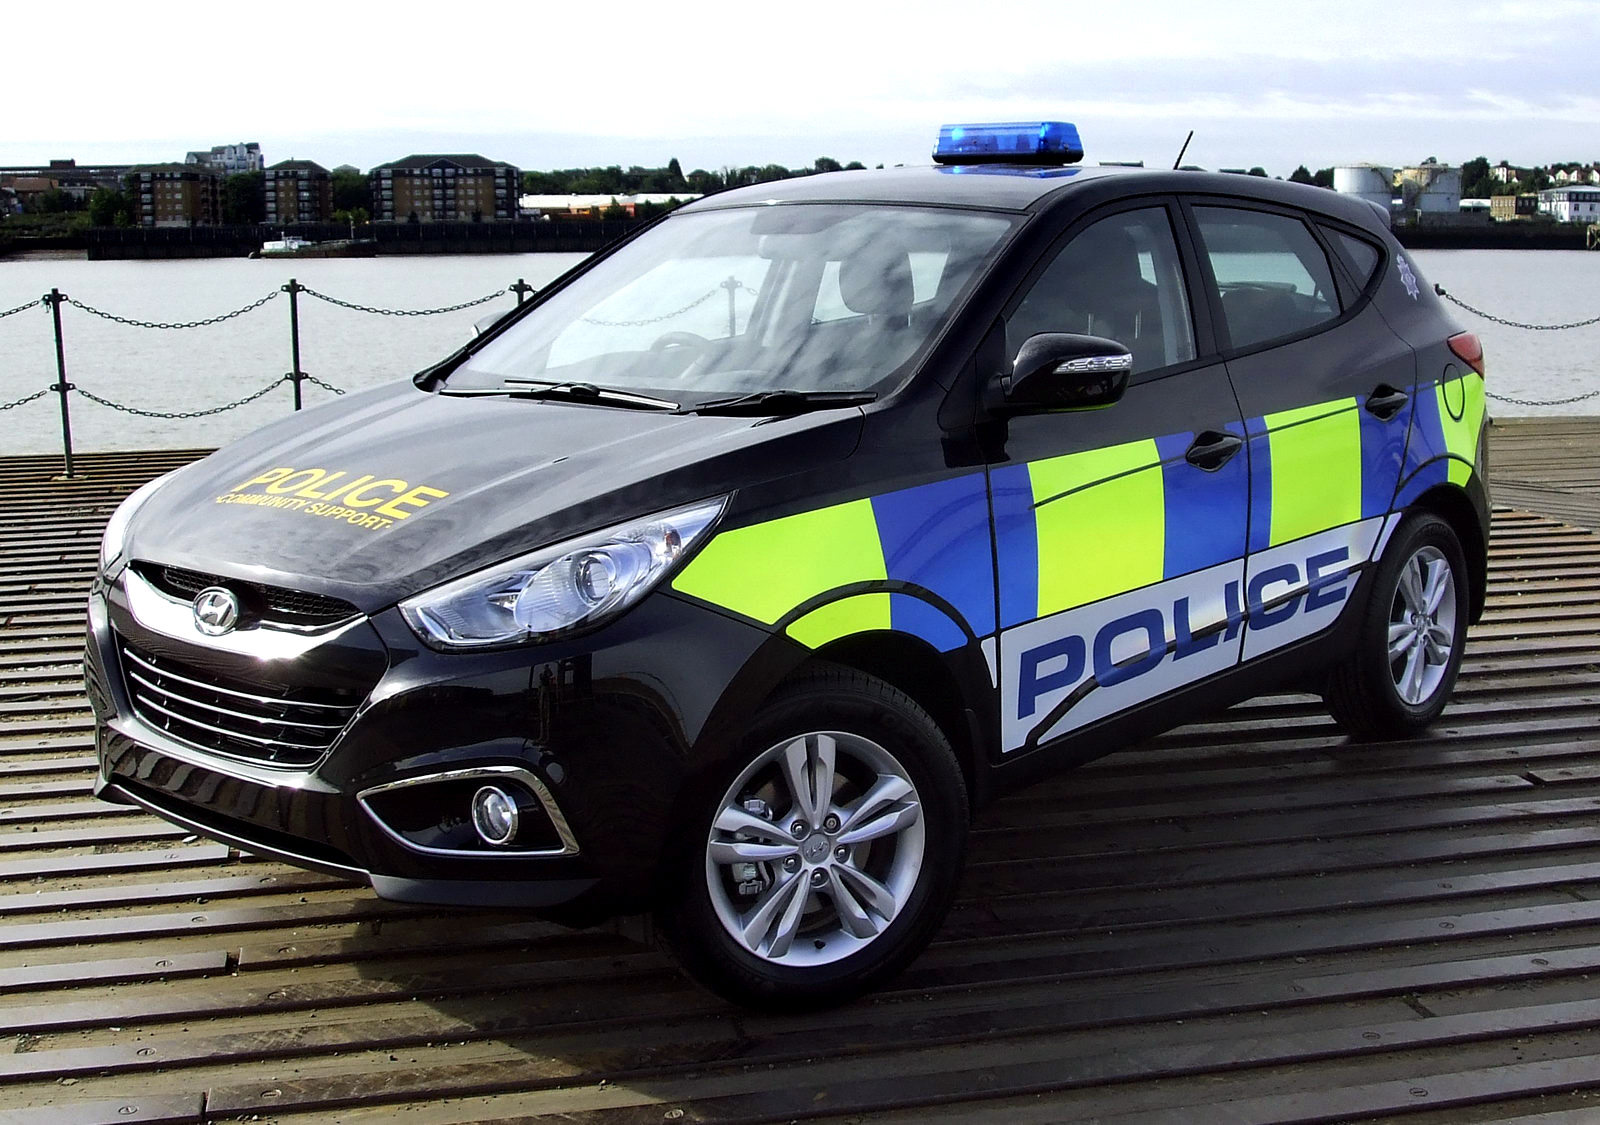 Hyundai IX35 UK Police livery